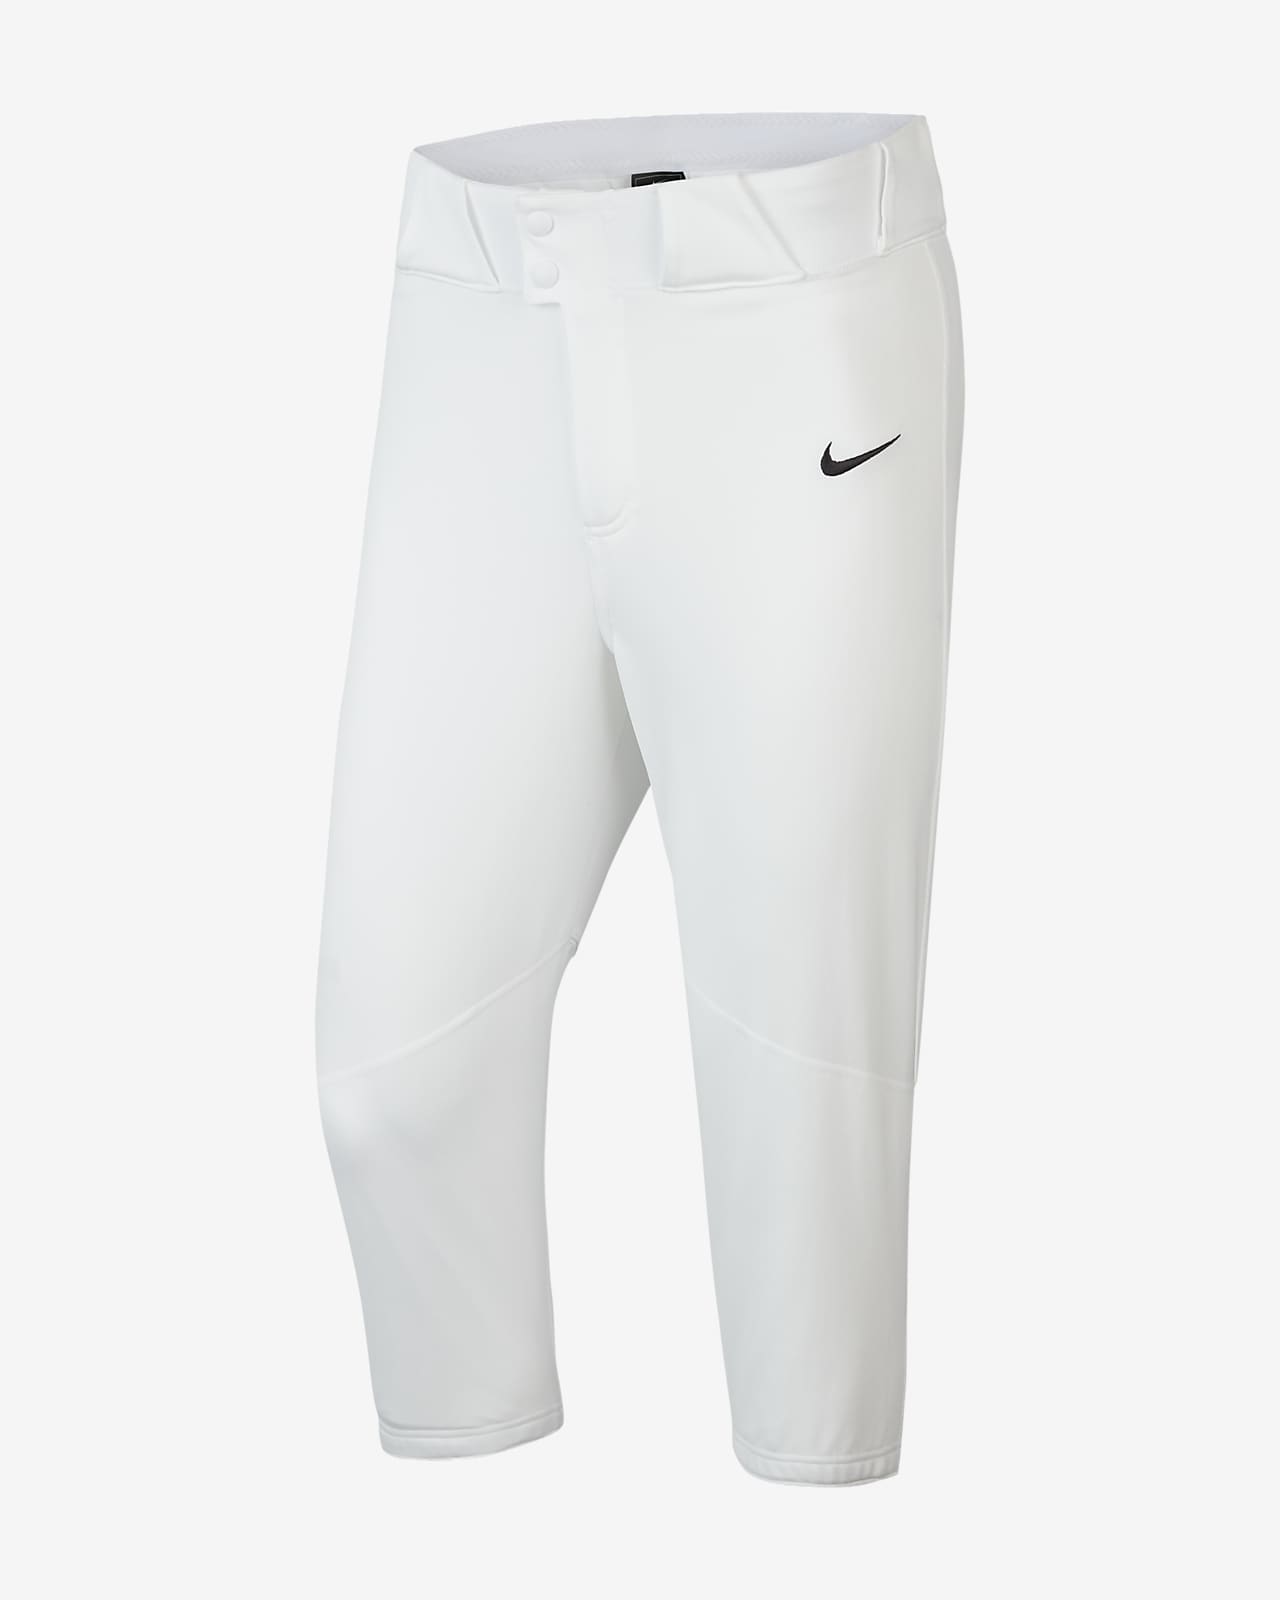 Nike Vapor Pro Baseball Pants Online Sale, UP TO 8 OFF